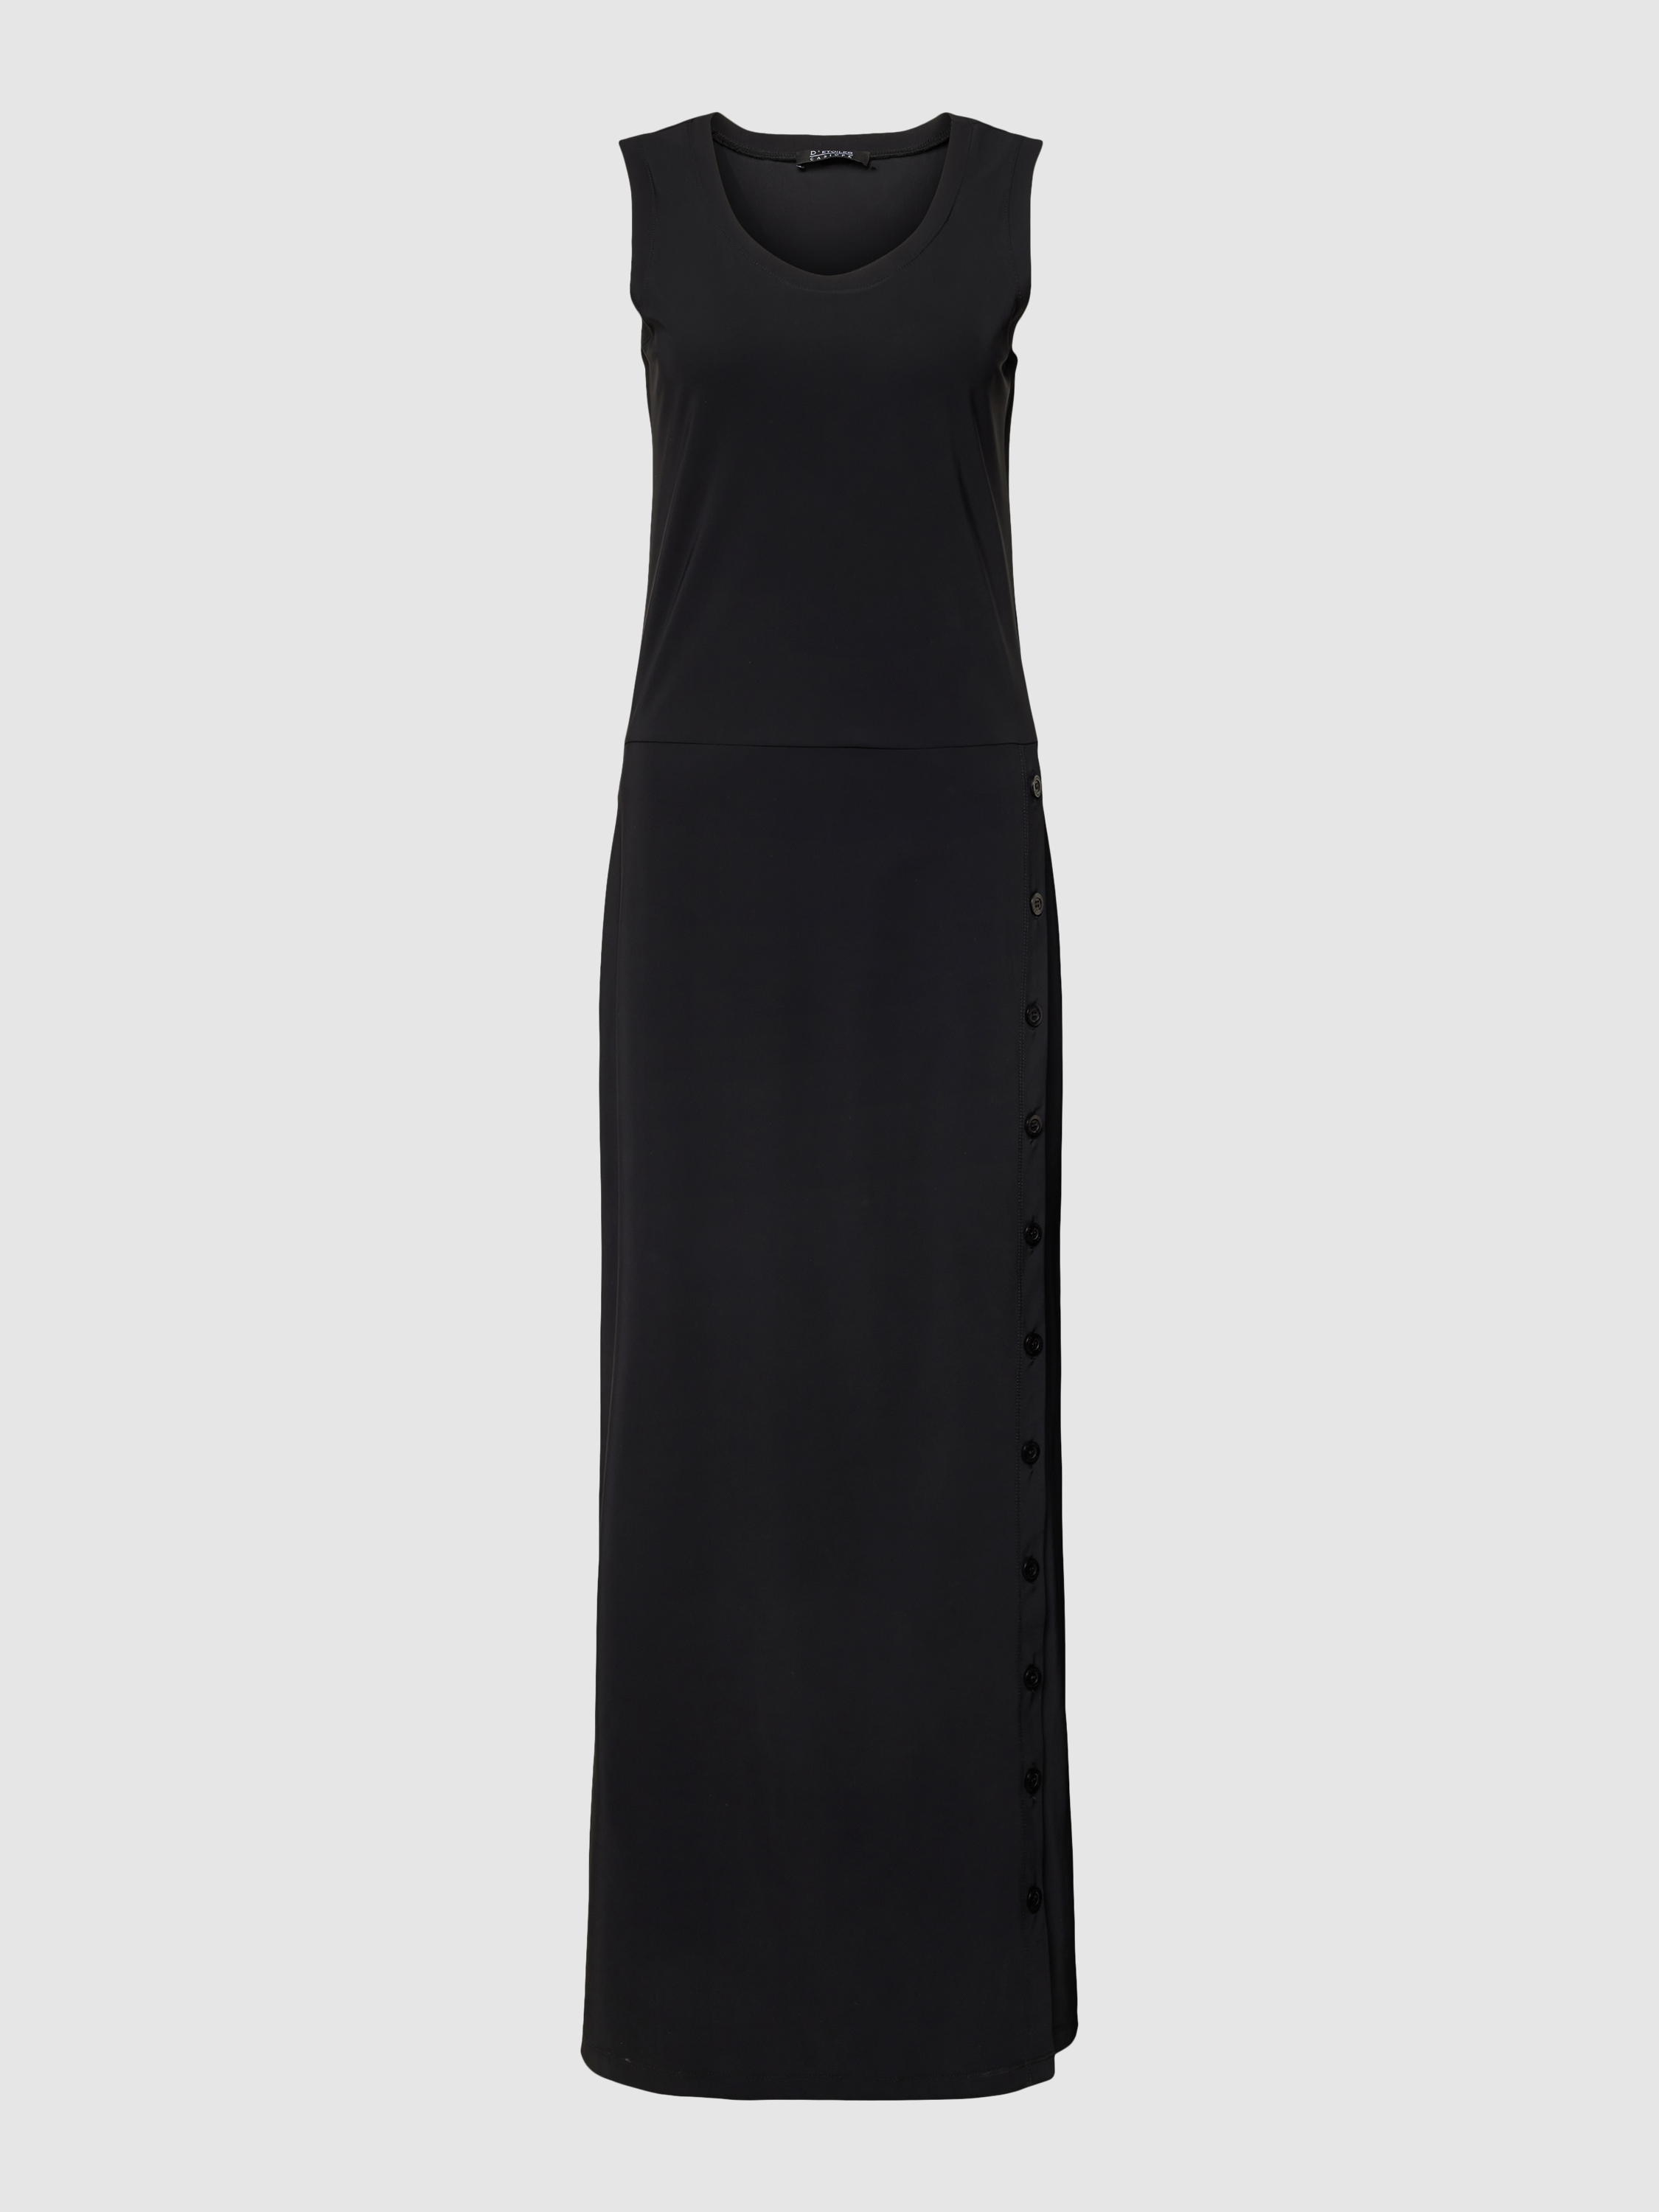 Платье женское D?Etoiles Casiope 1831749 черное XS (доставка из-за рубежа)